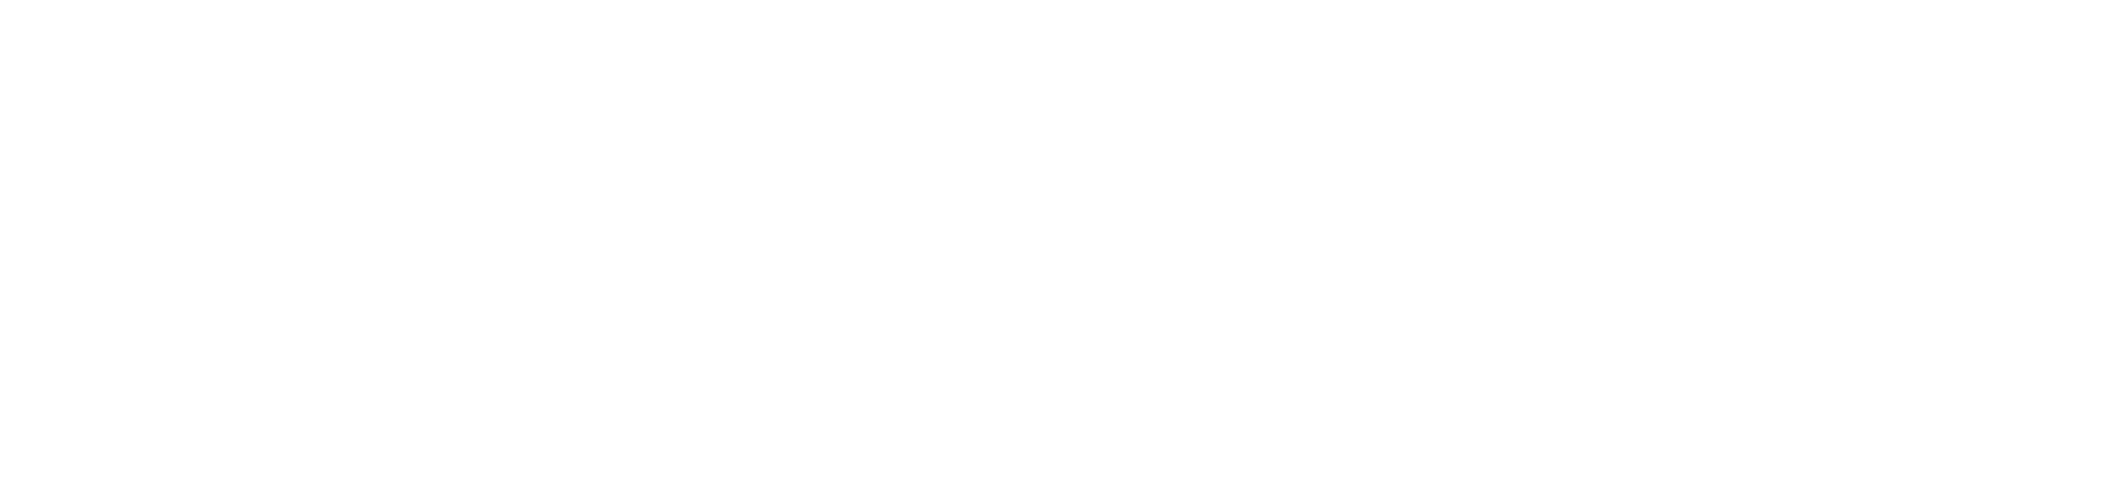 Xevalics Consulting Logo